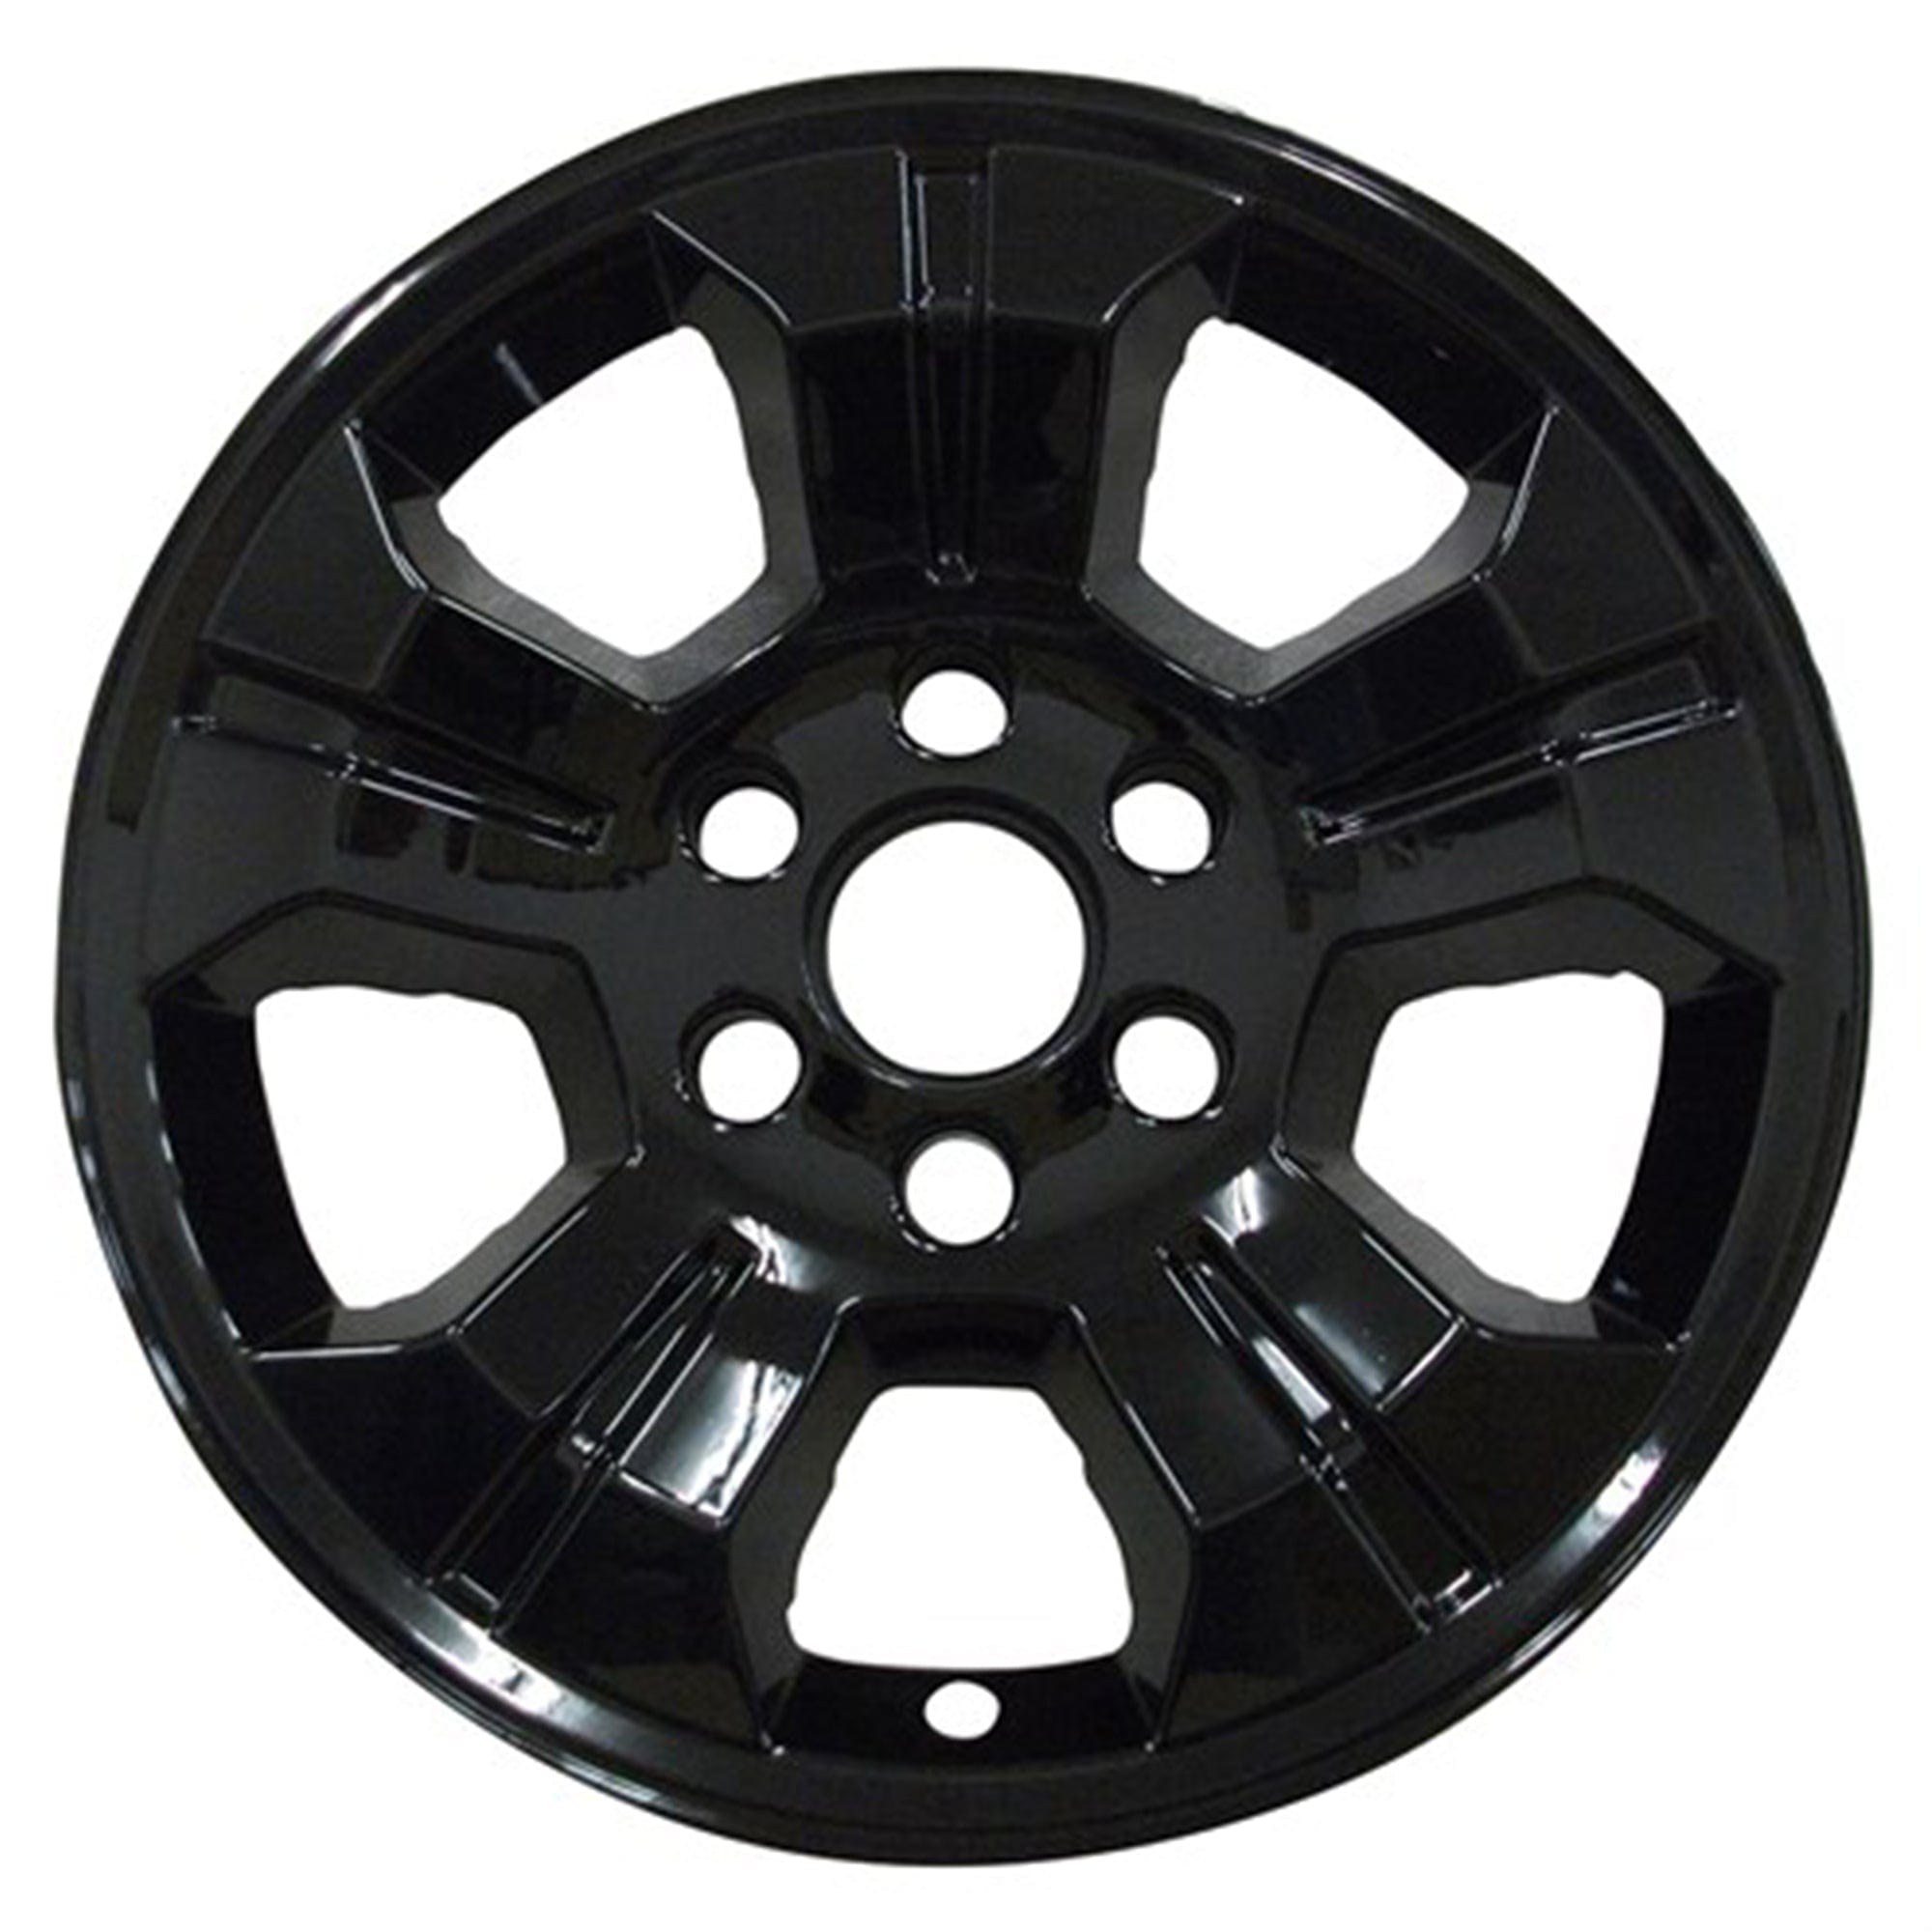 PacRim 8951-GB 18" Chevrolet (2014-2018) Gloss Black Wheel Skin Set